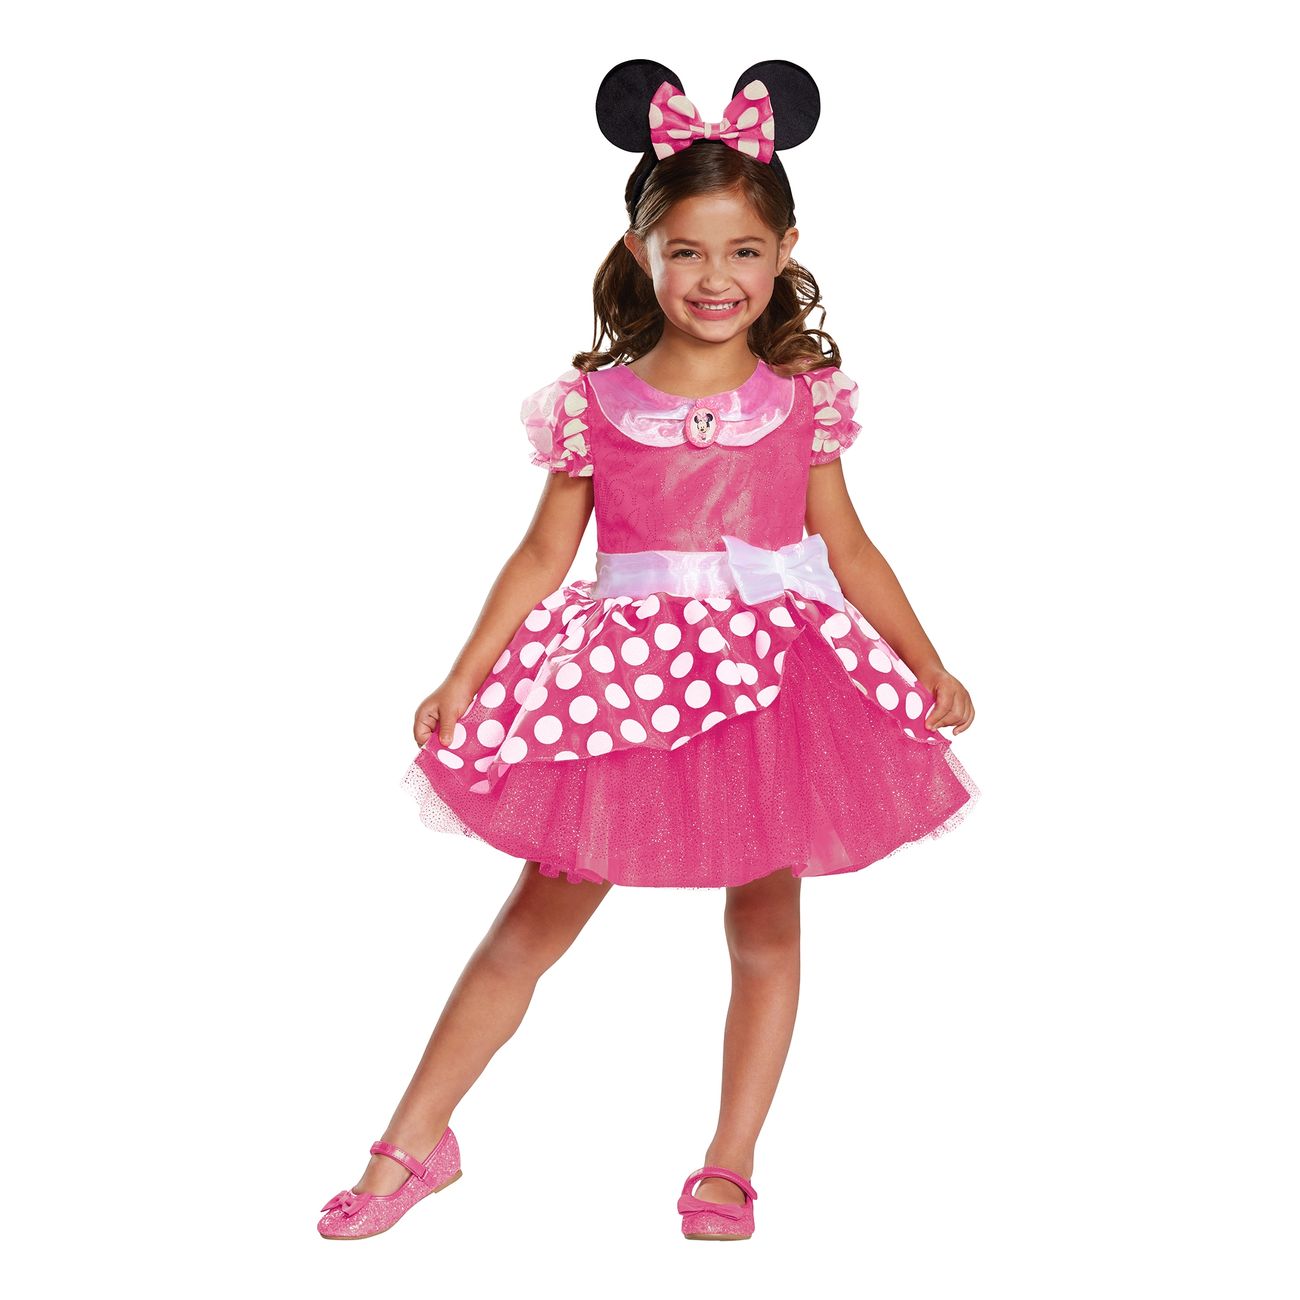 Minnie Mouse børnekostume pink - Minnie Mouse kostume til børn